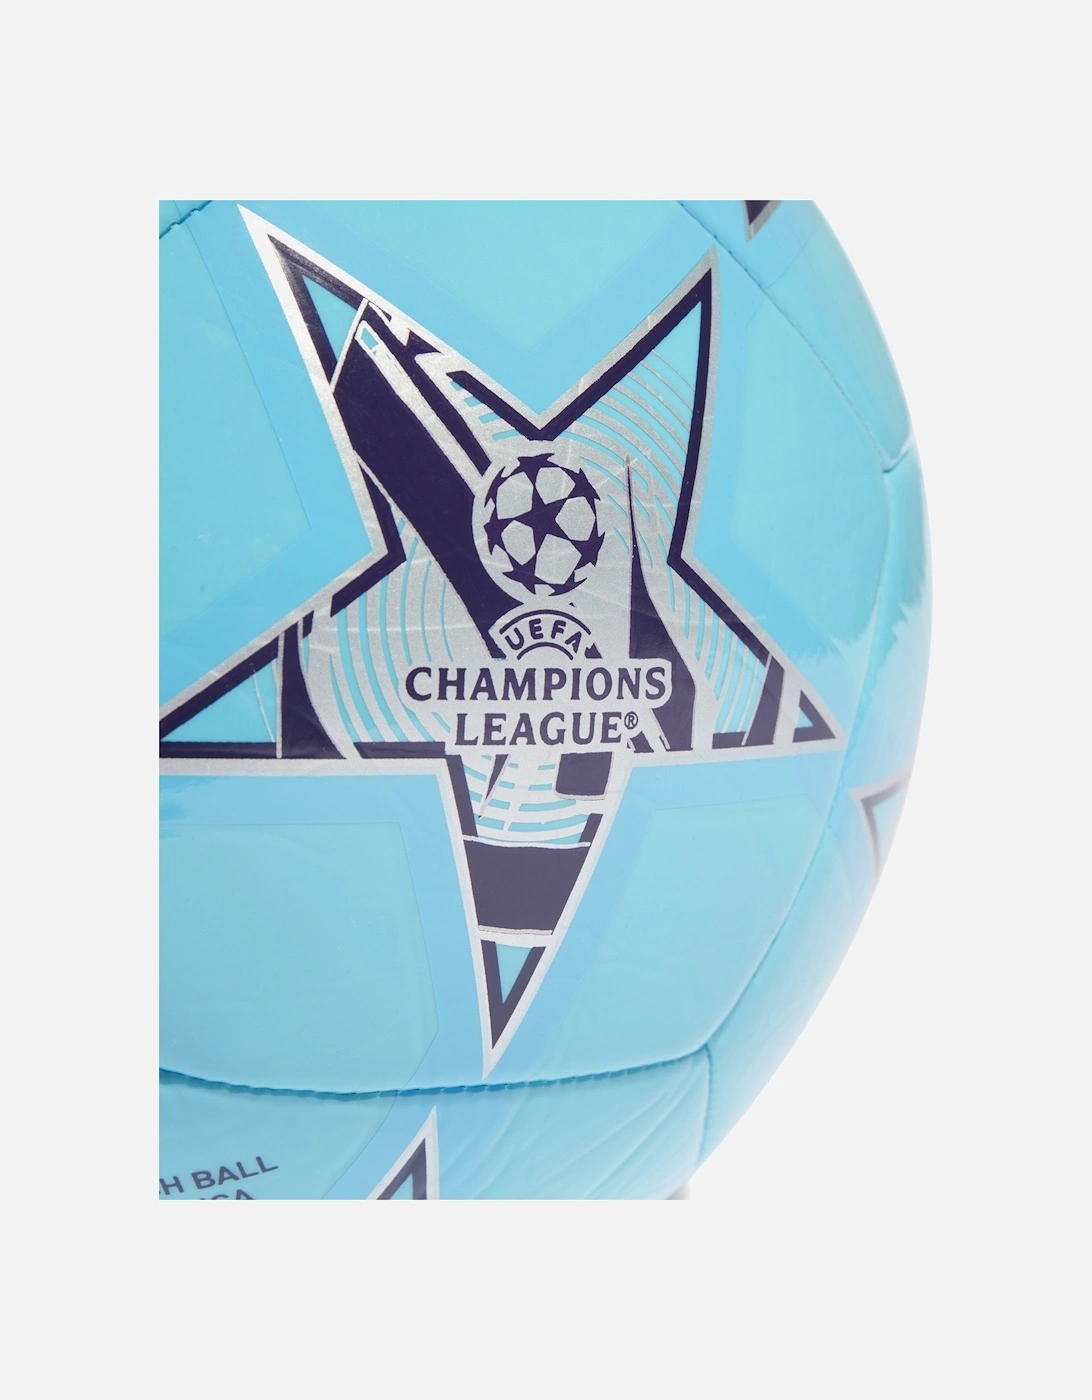 Champions League Club Football (Blue)